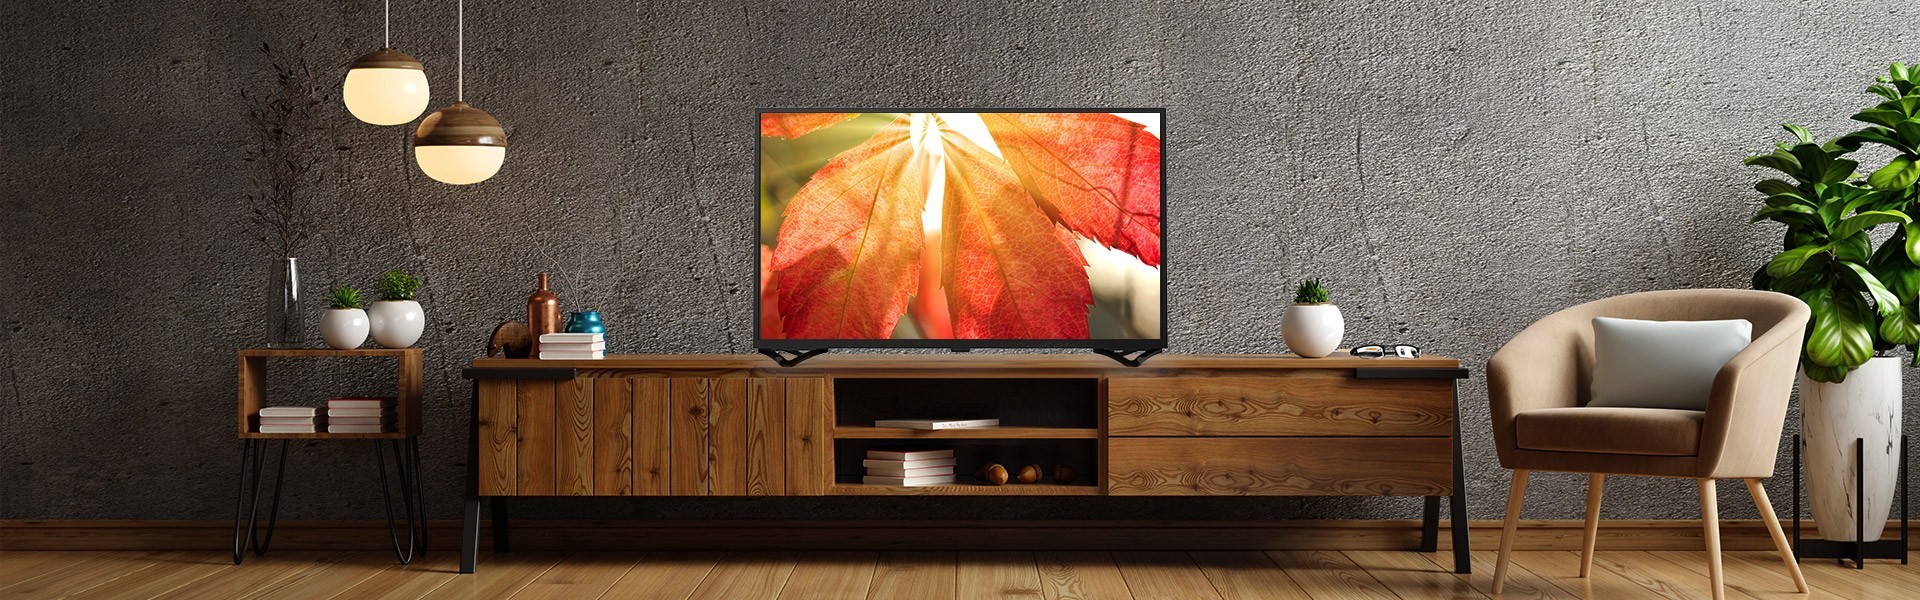 AXEN 43" FULL HD SMART LED TV